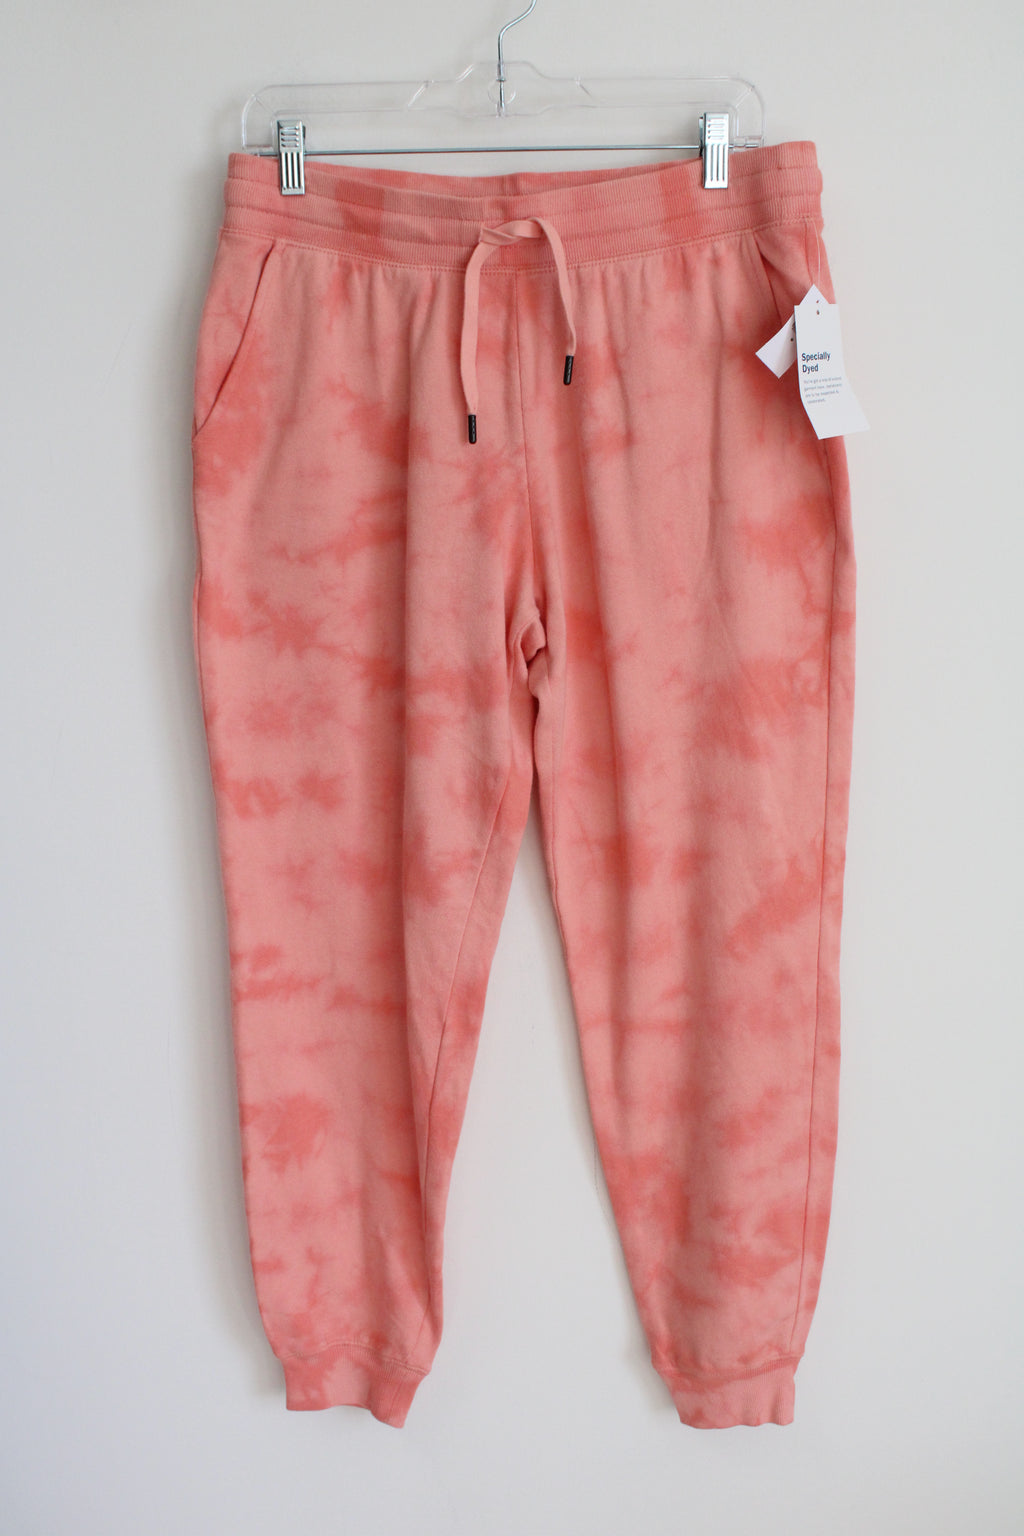 NEW Old Navy Orange & Pink Fleece Lined Tie Dye Joggers | M